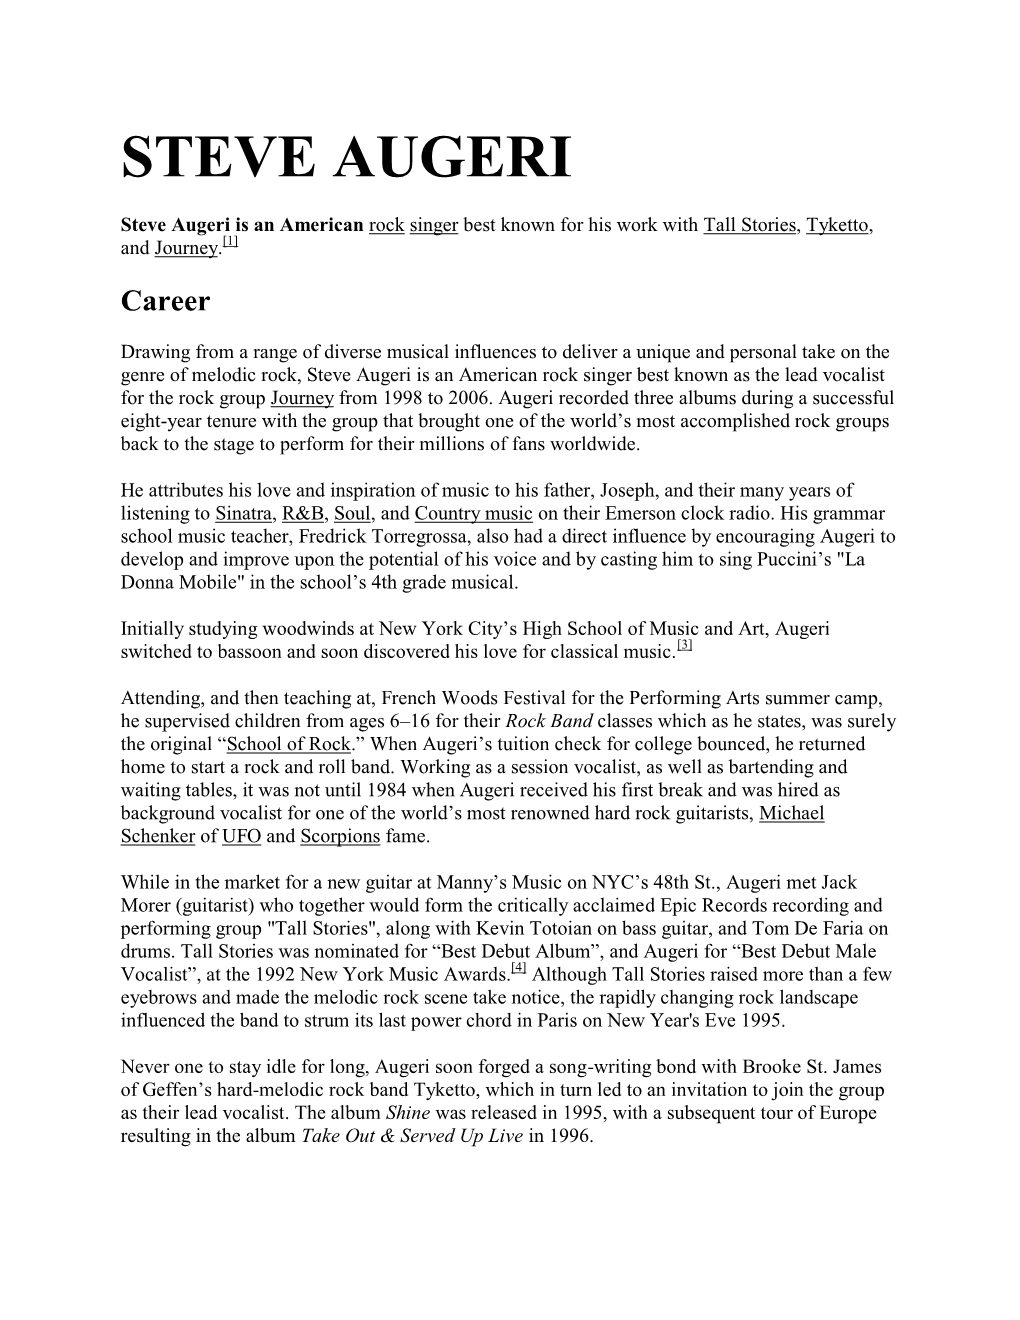 Steve Augeri